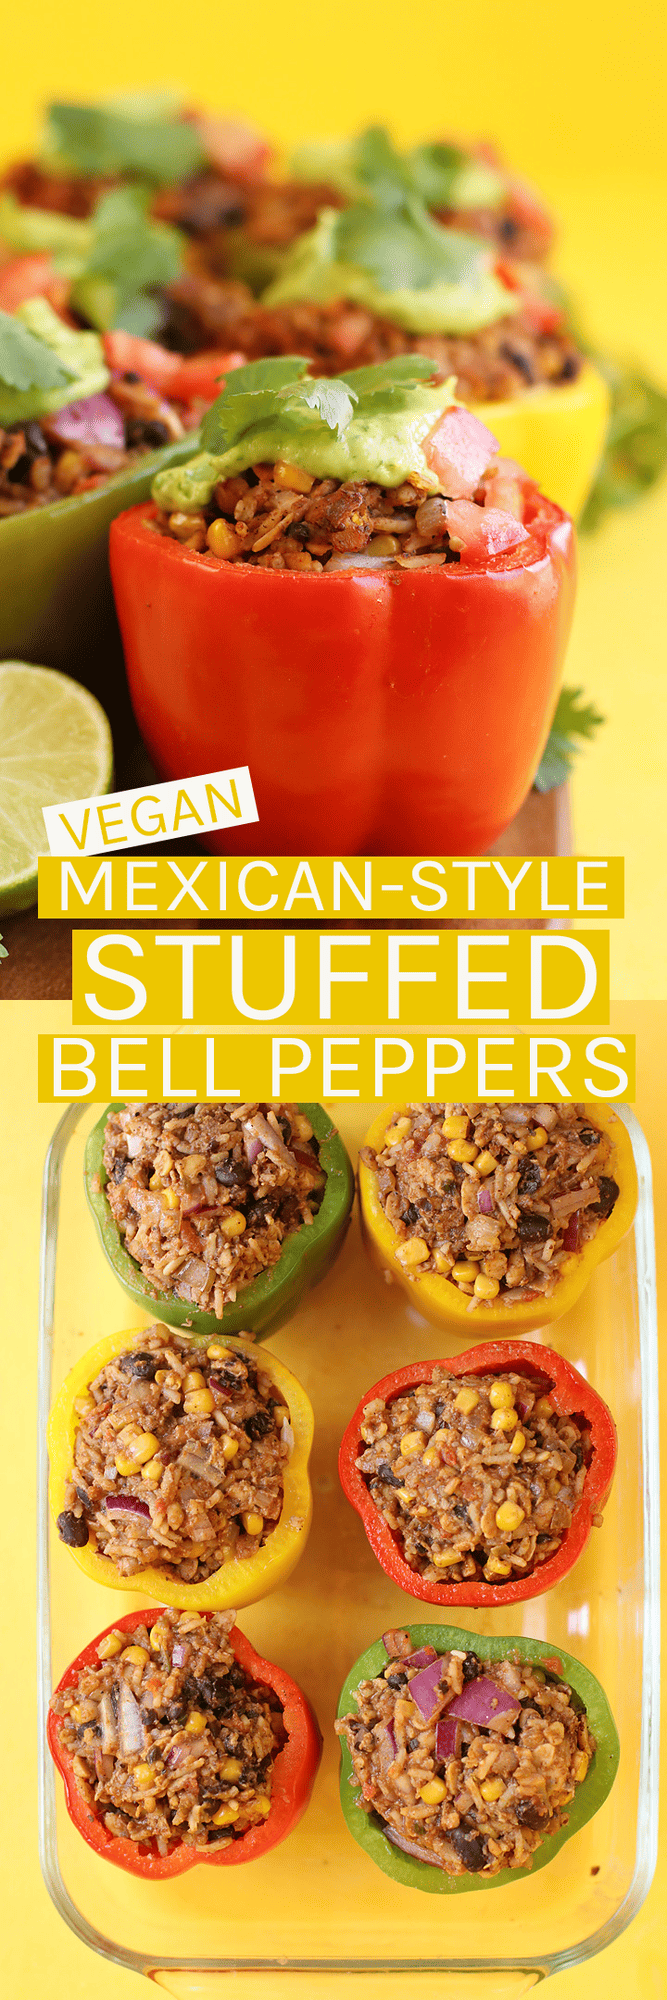 Mexican-Style Vegan Stuffed Peppers | My Darling Vegan